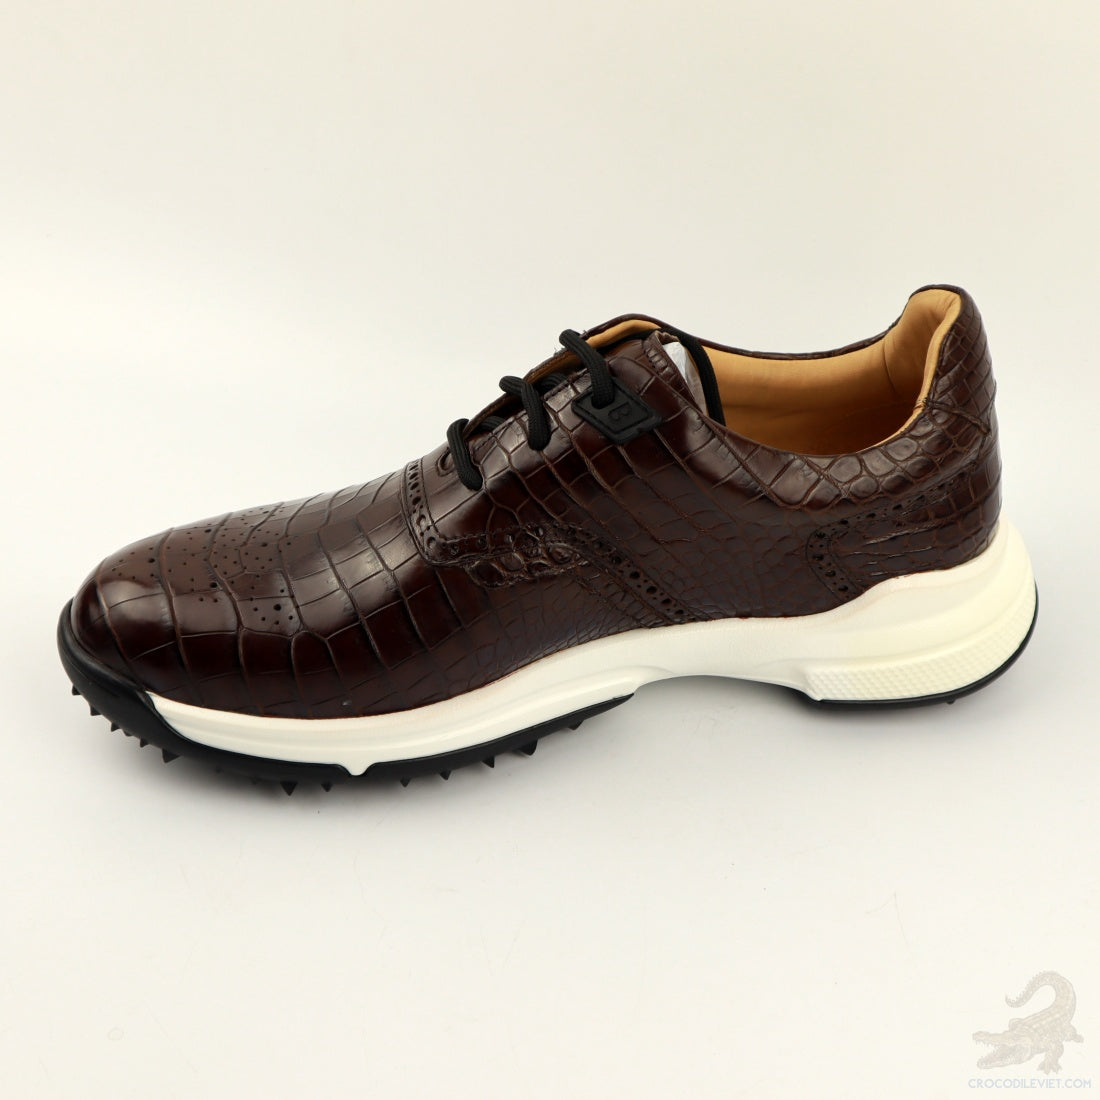 Men's Shoes Genuine Crocodile Alligator Leather Golf Shoes Size 7-11US